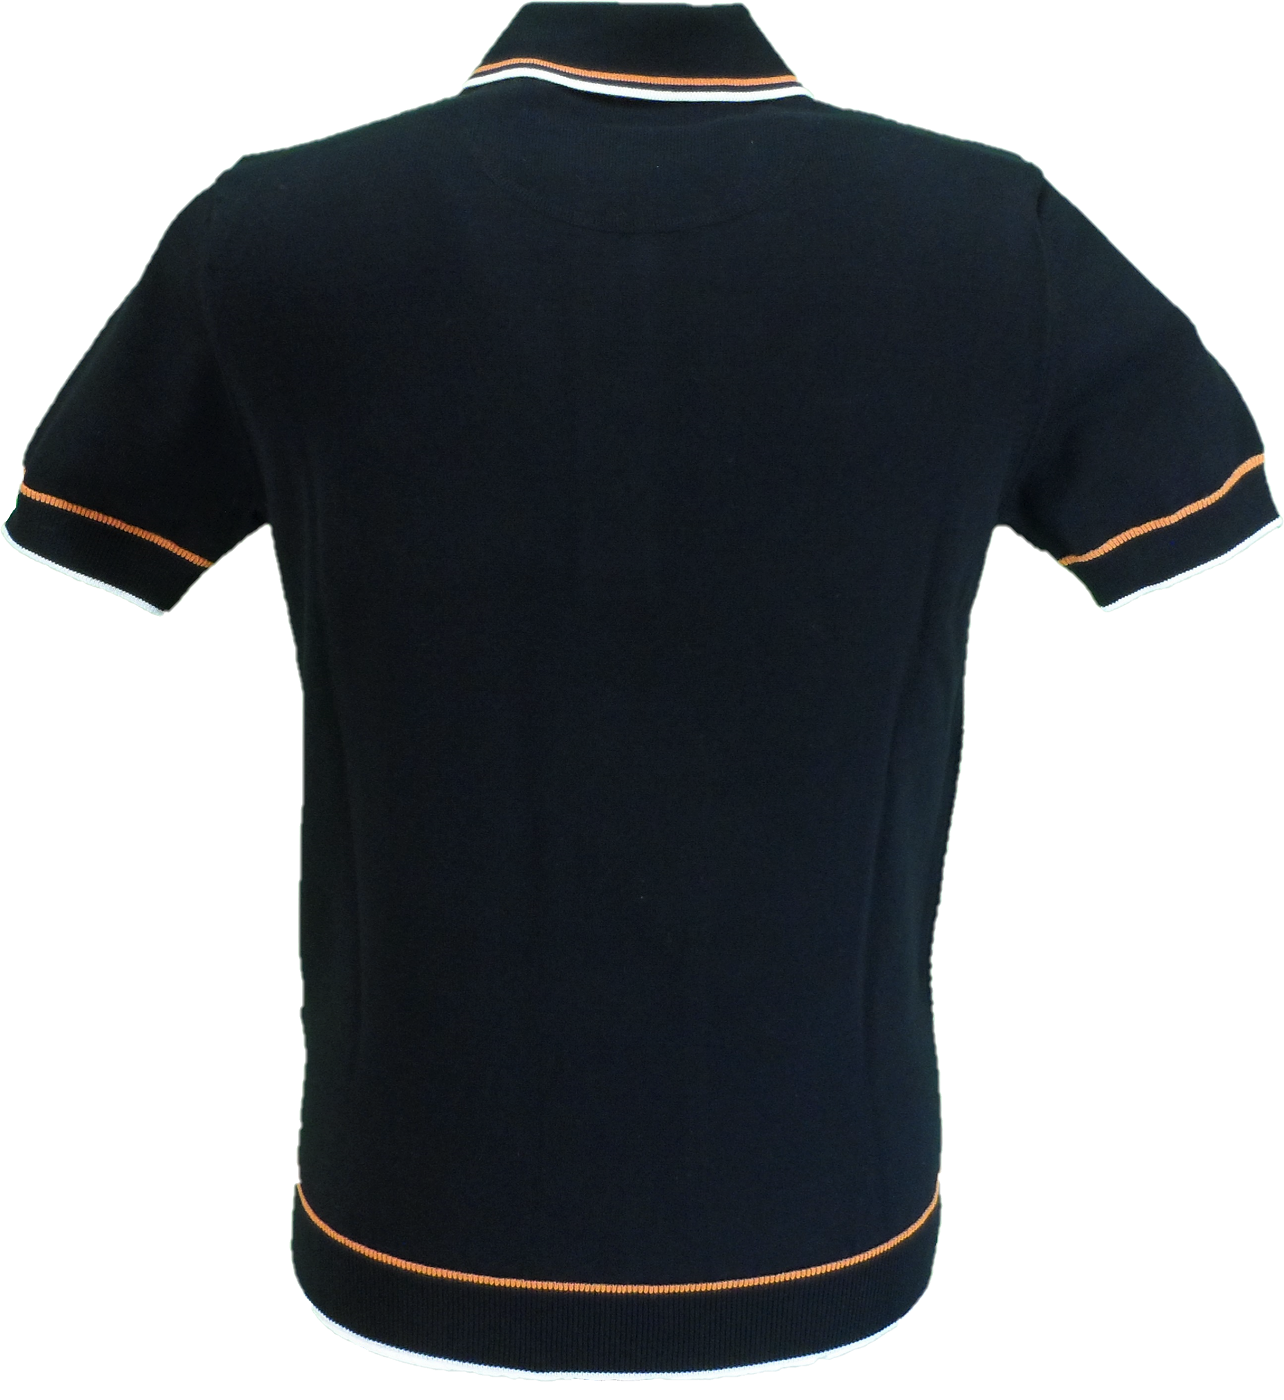 Trojan Mens Black/Orange/White Textured Fine Gauge Knitted Polo Shirt